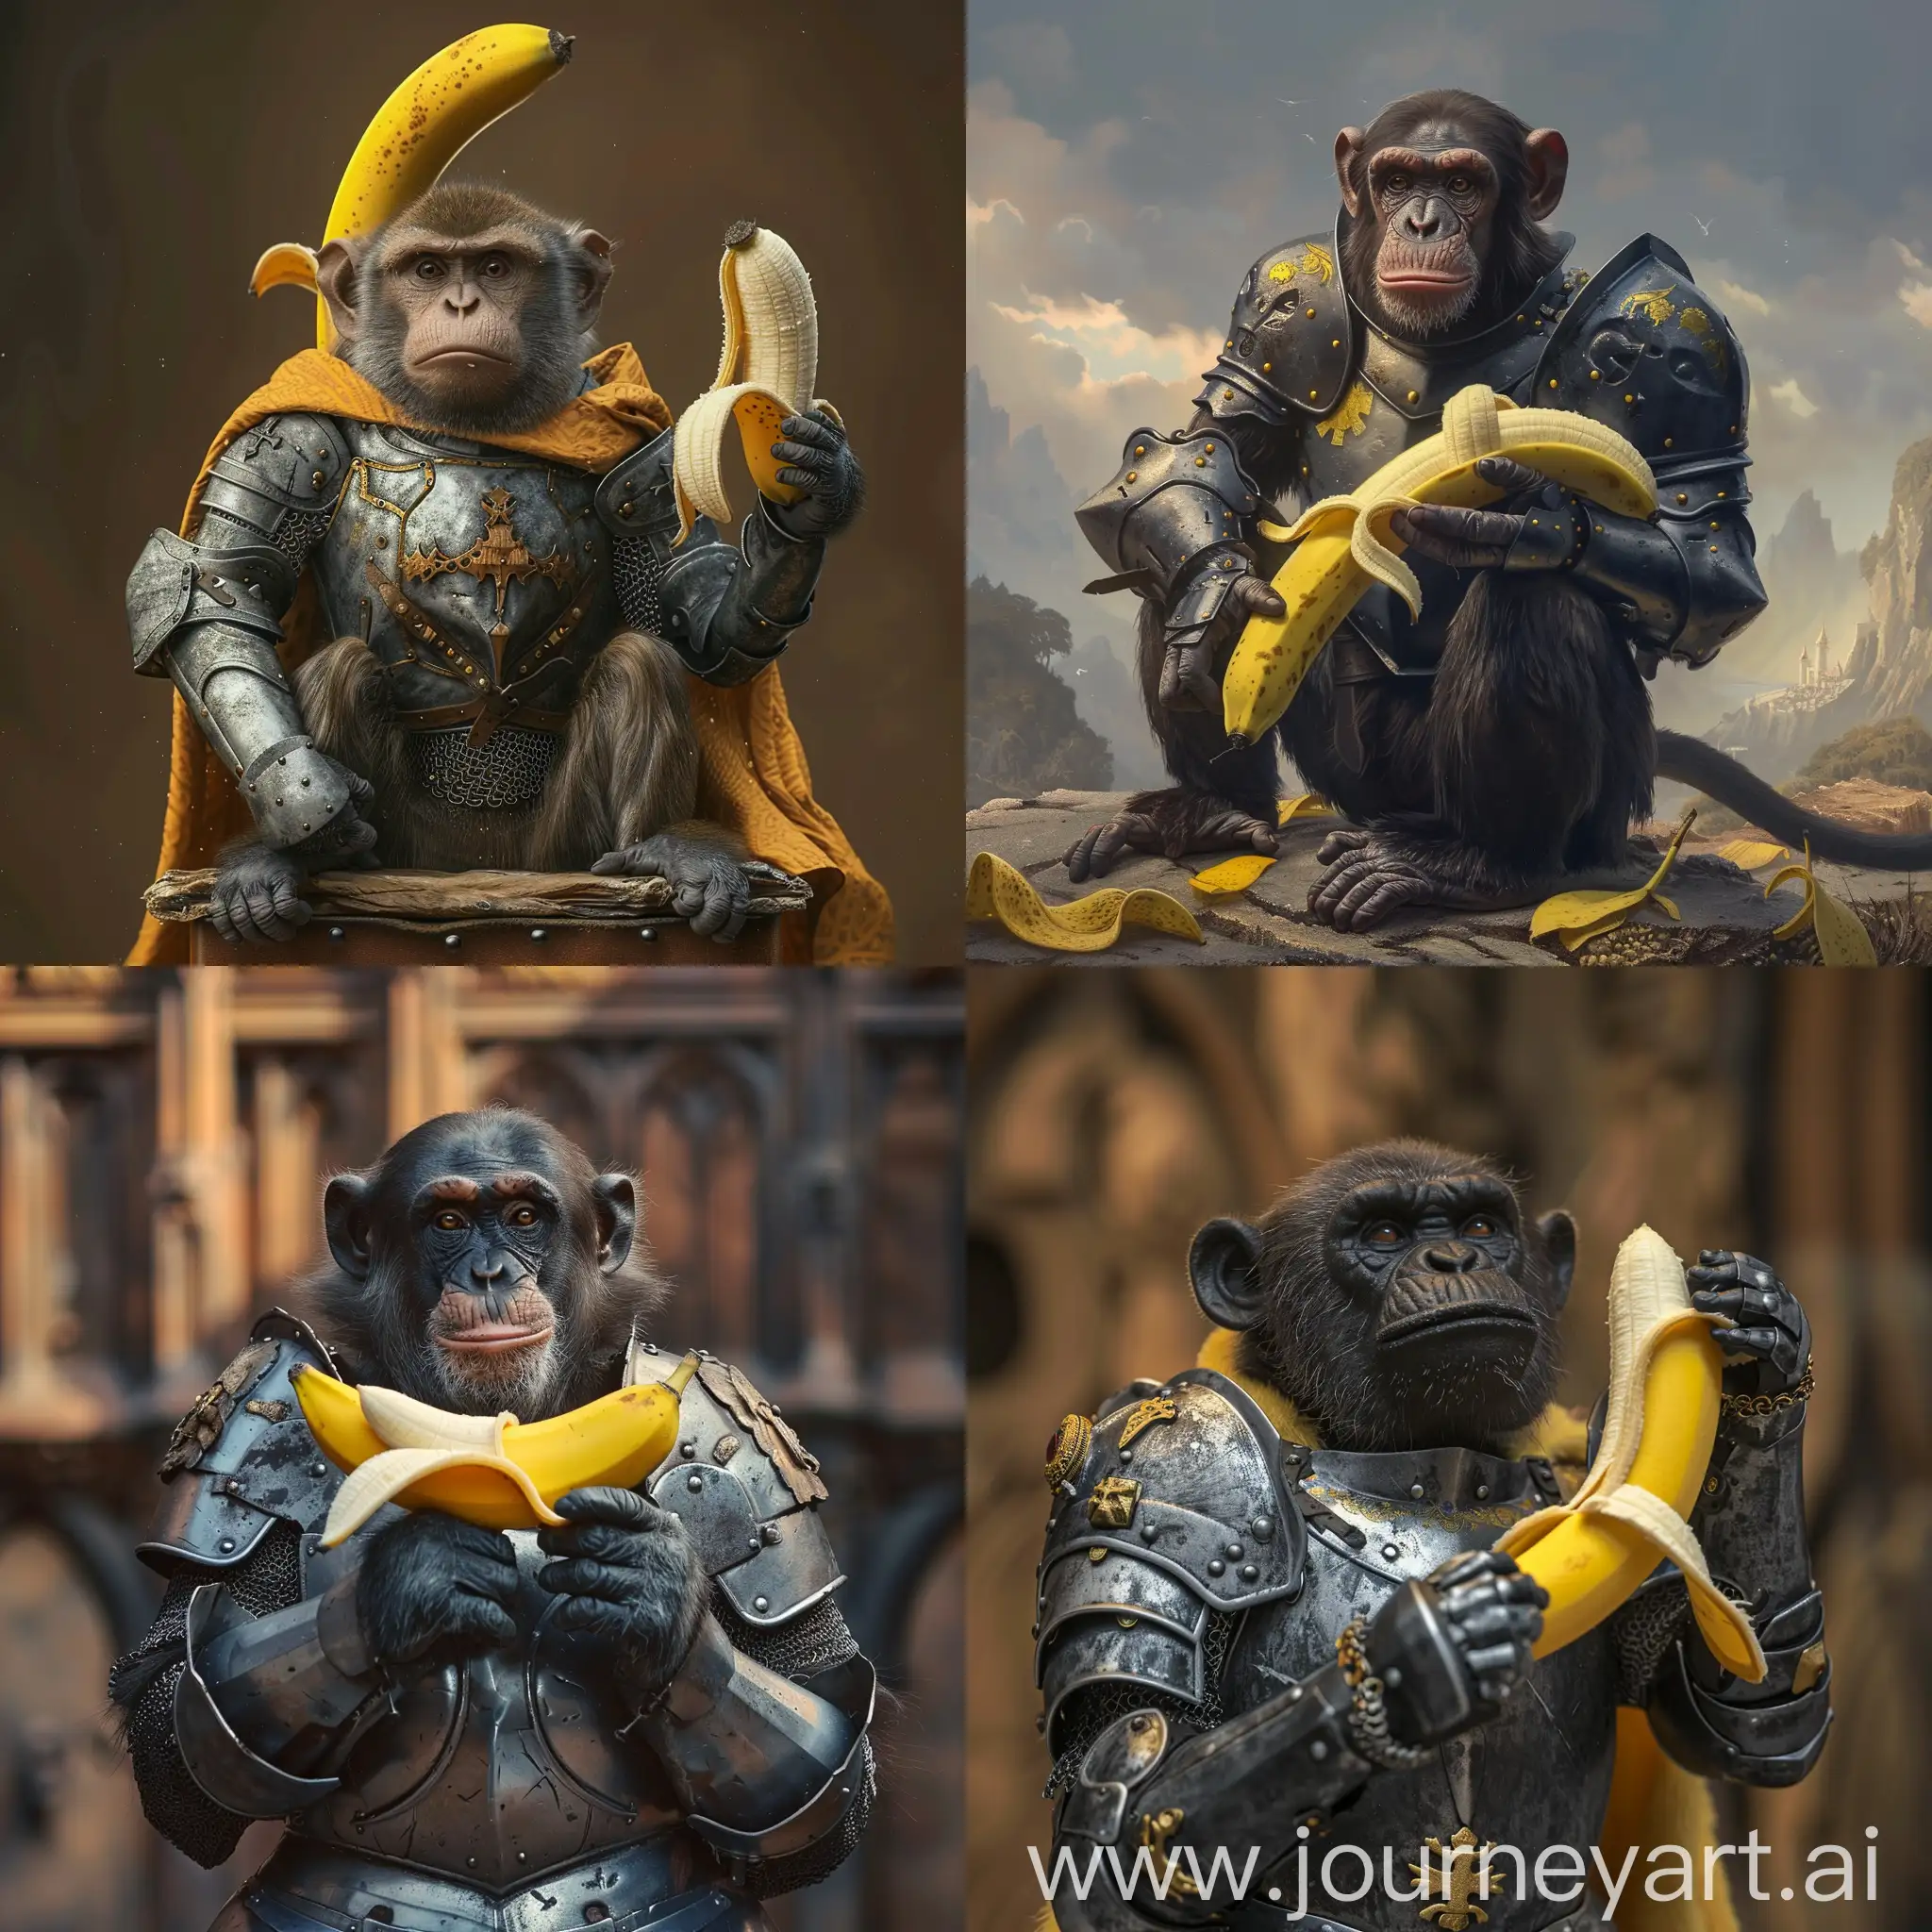 Monkey-Knight-Presenting-Armored-Banana-Tribute